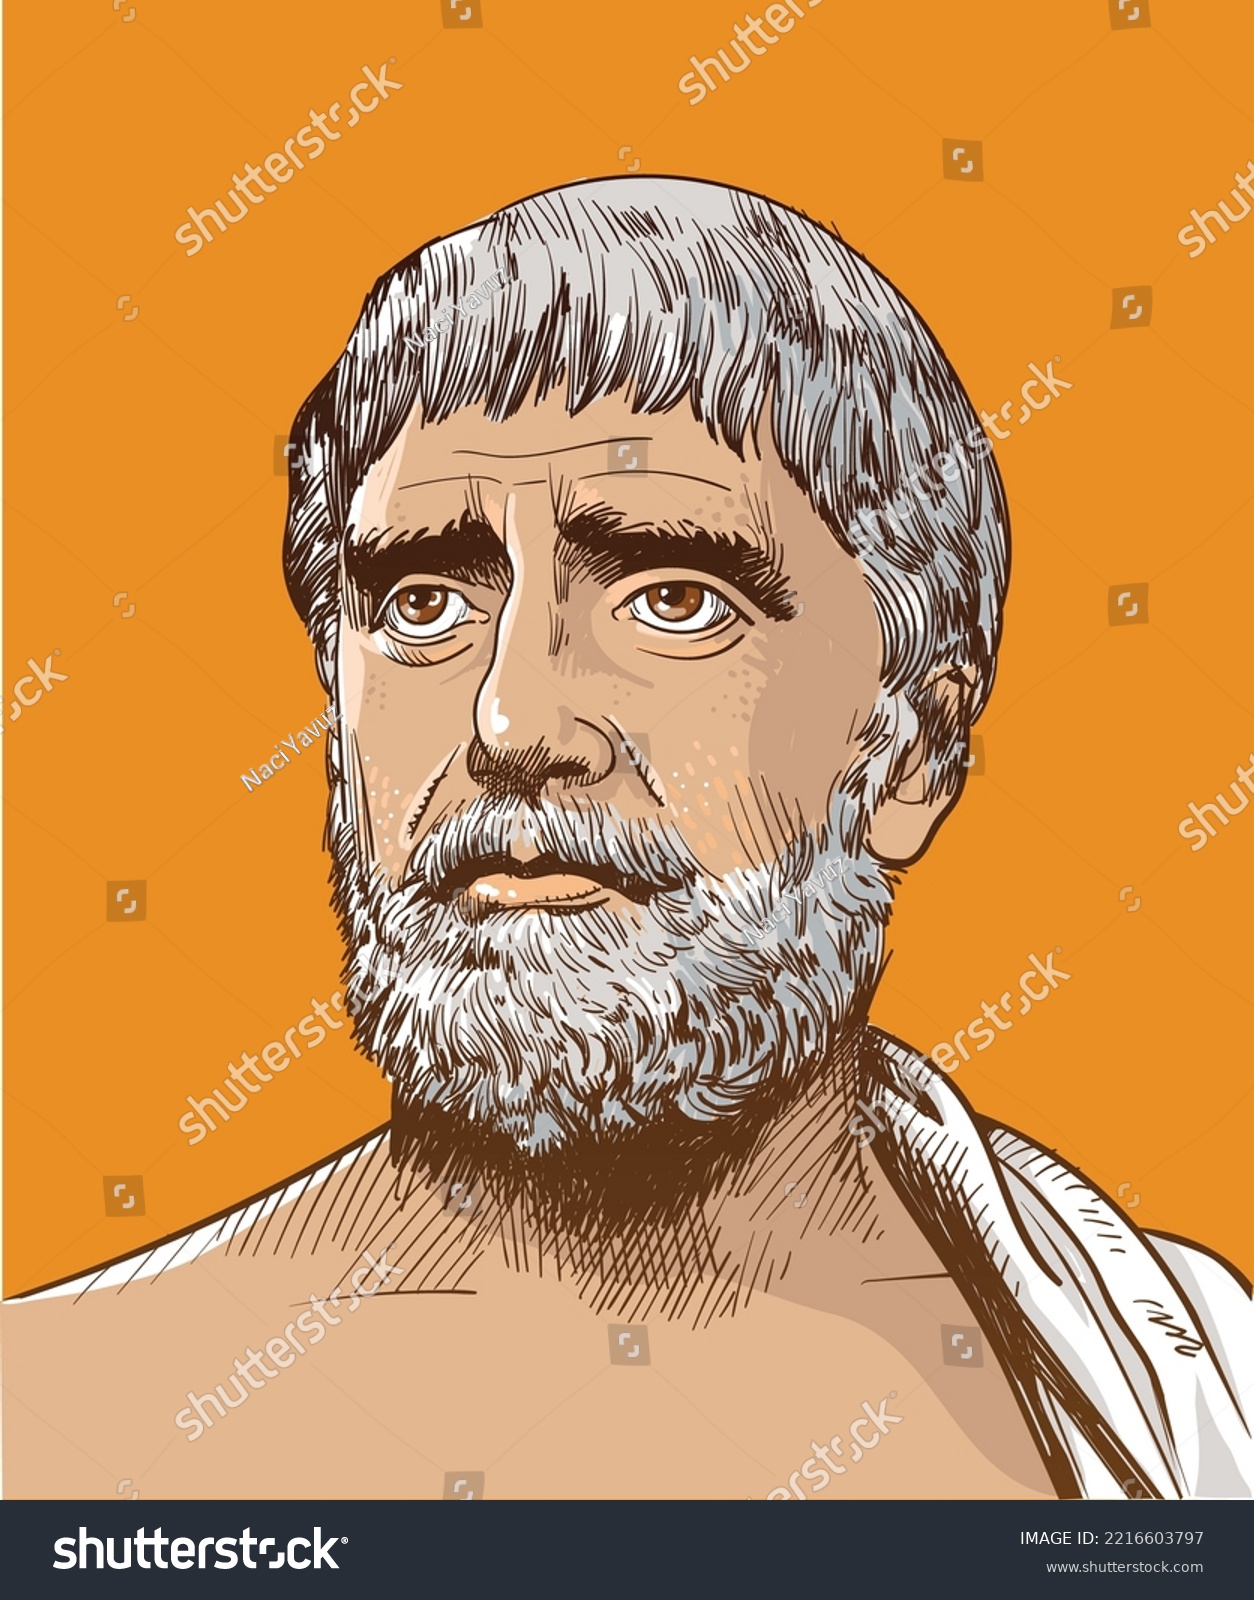 Thales of Miletus line art portrait. Pre-Socratic Greek philosopher, mathematician, and astronomer. Vector #2216603797